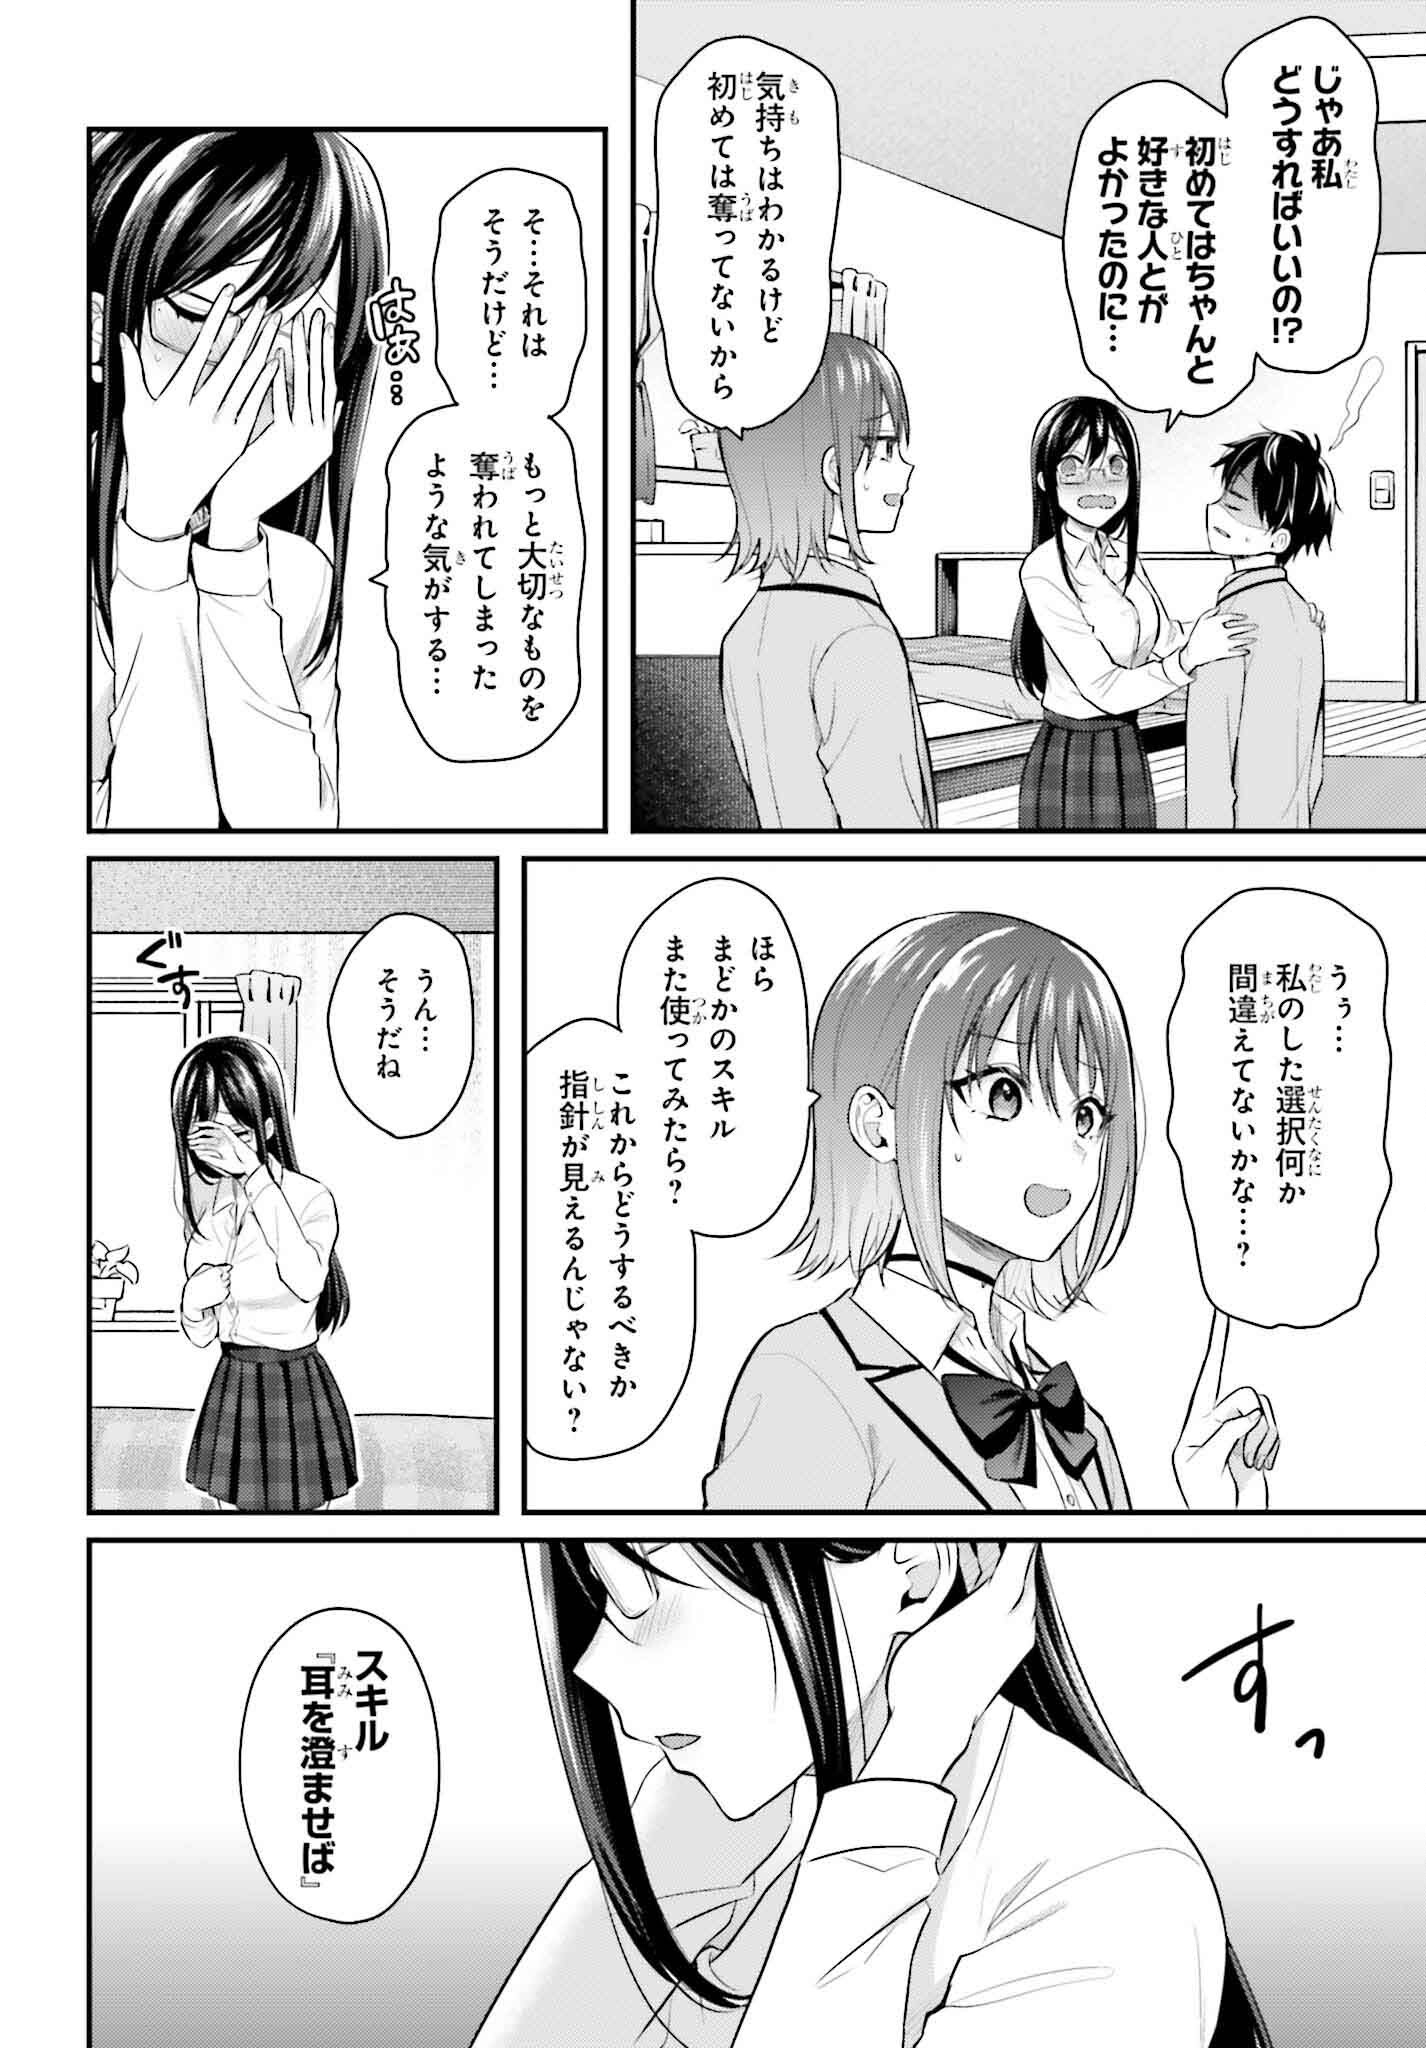 Boukensha ni Nare Nakatta Ore, Skill Oppai Kyousei de Nayameru Ano Ko wo Hito Dasuke!? - Chapter 5 - Page 2